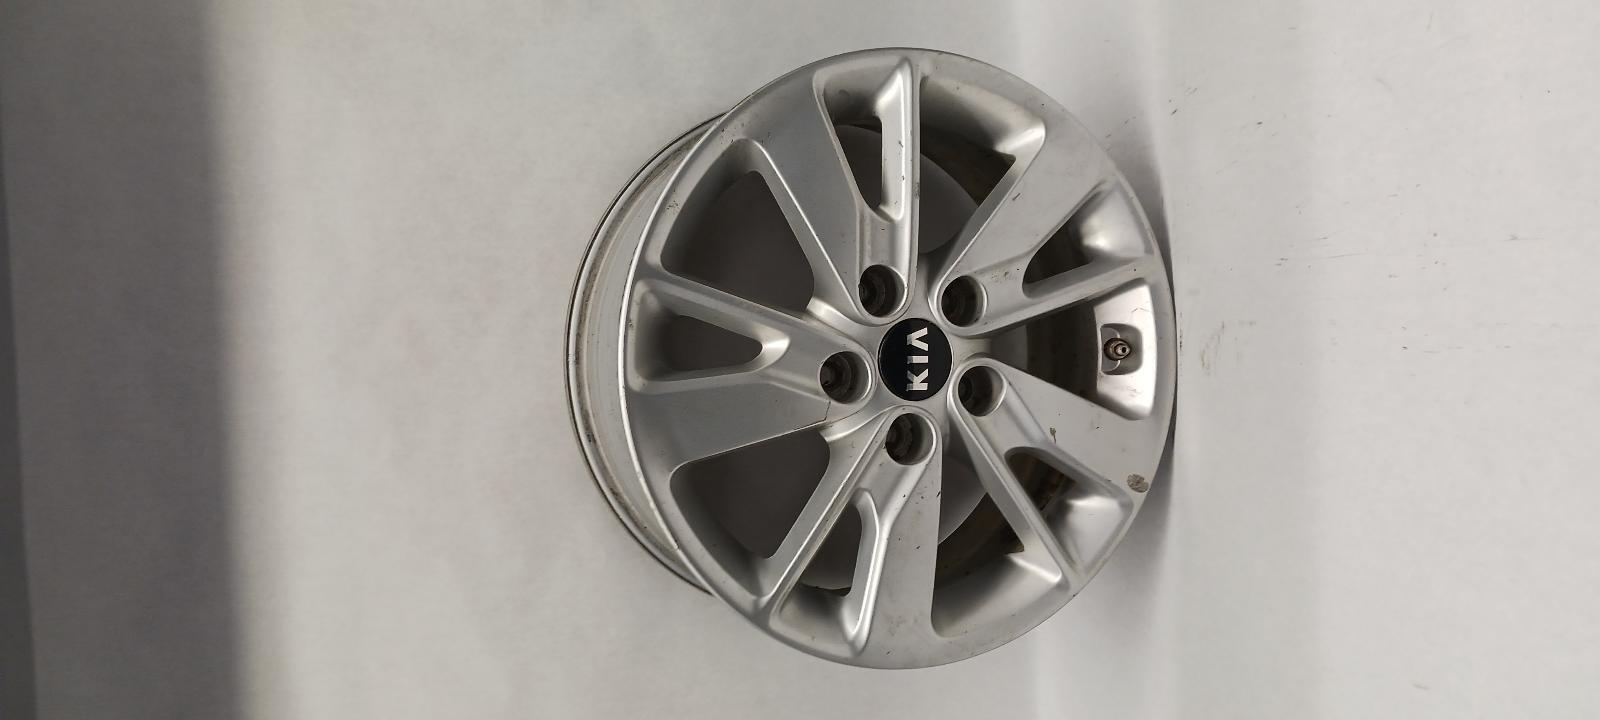 2016 KIA OPTIMA Wheel 16x6-1/2 alloy angled spoke silver OEM 16